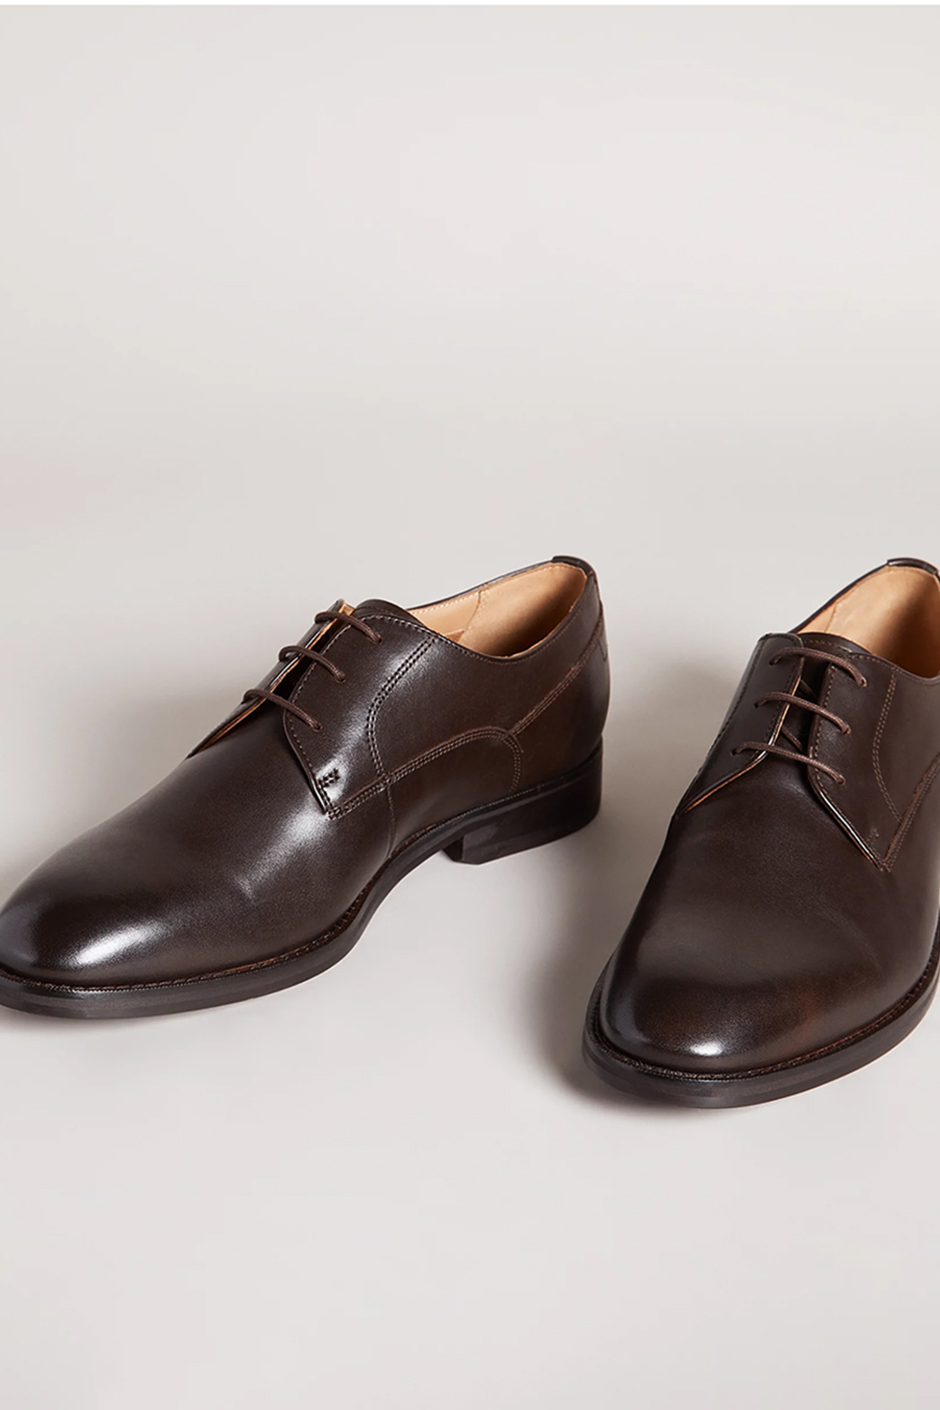 ted-baker-leather-derby-brown-groom-shoes.jpg